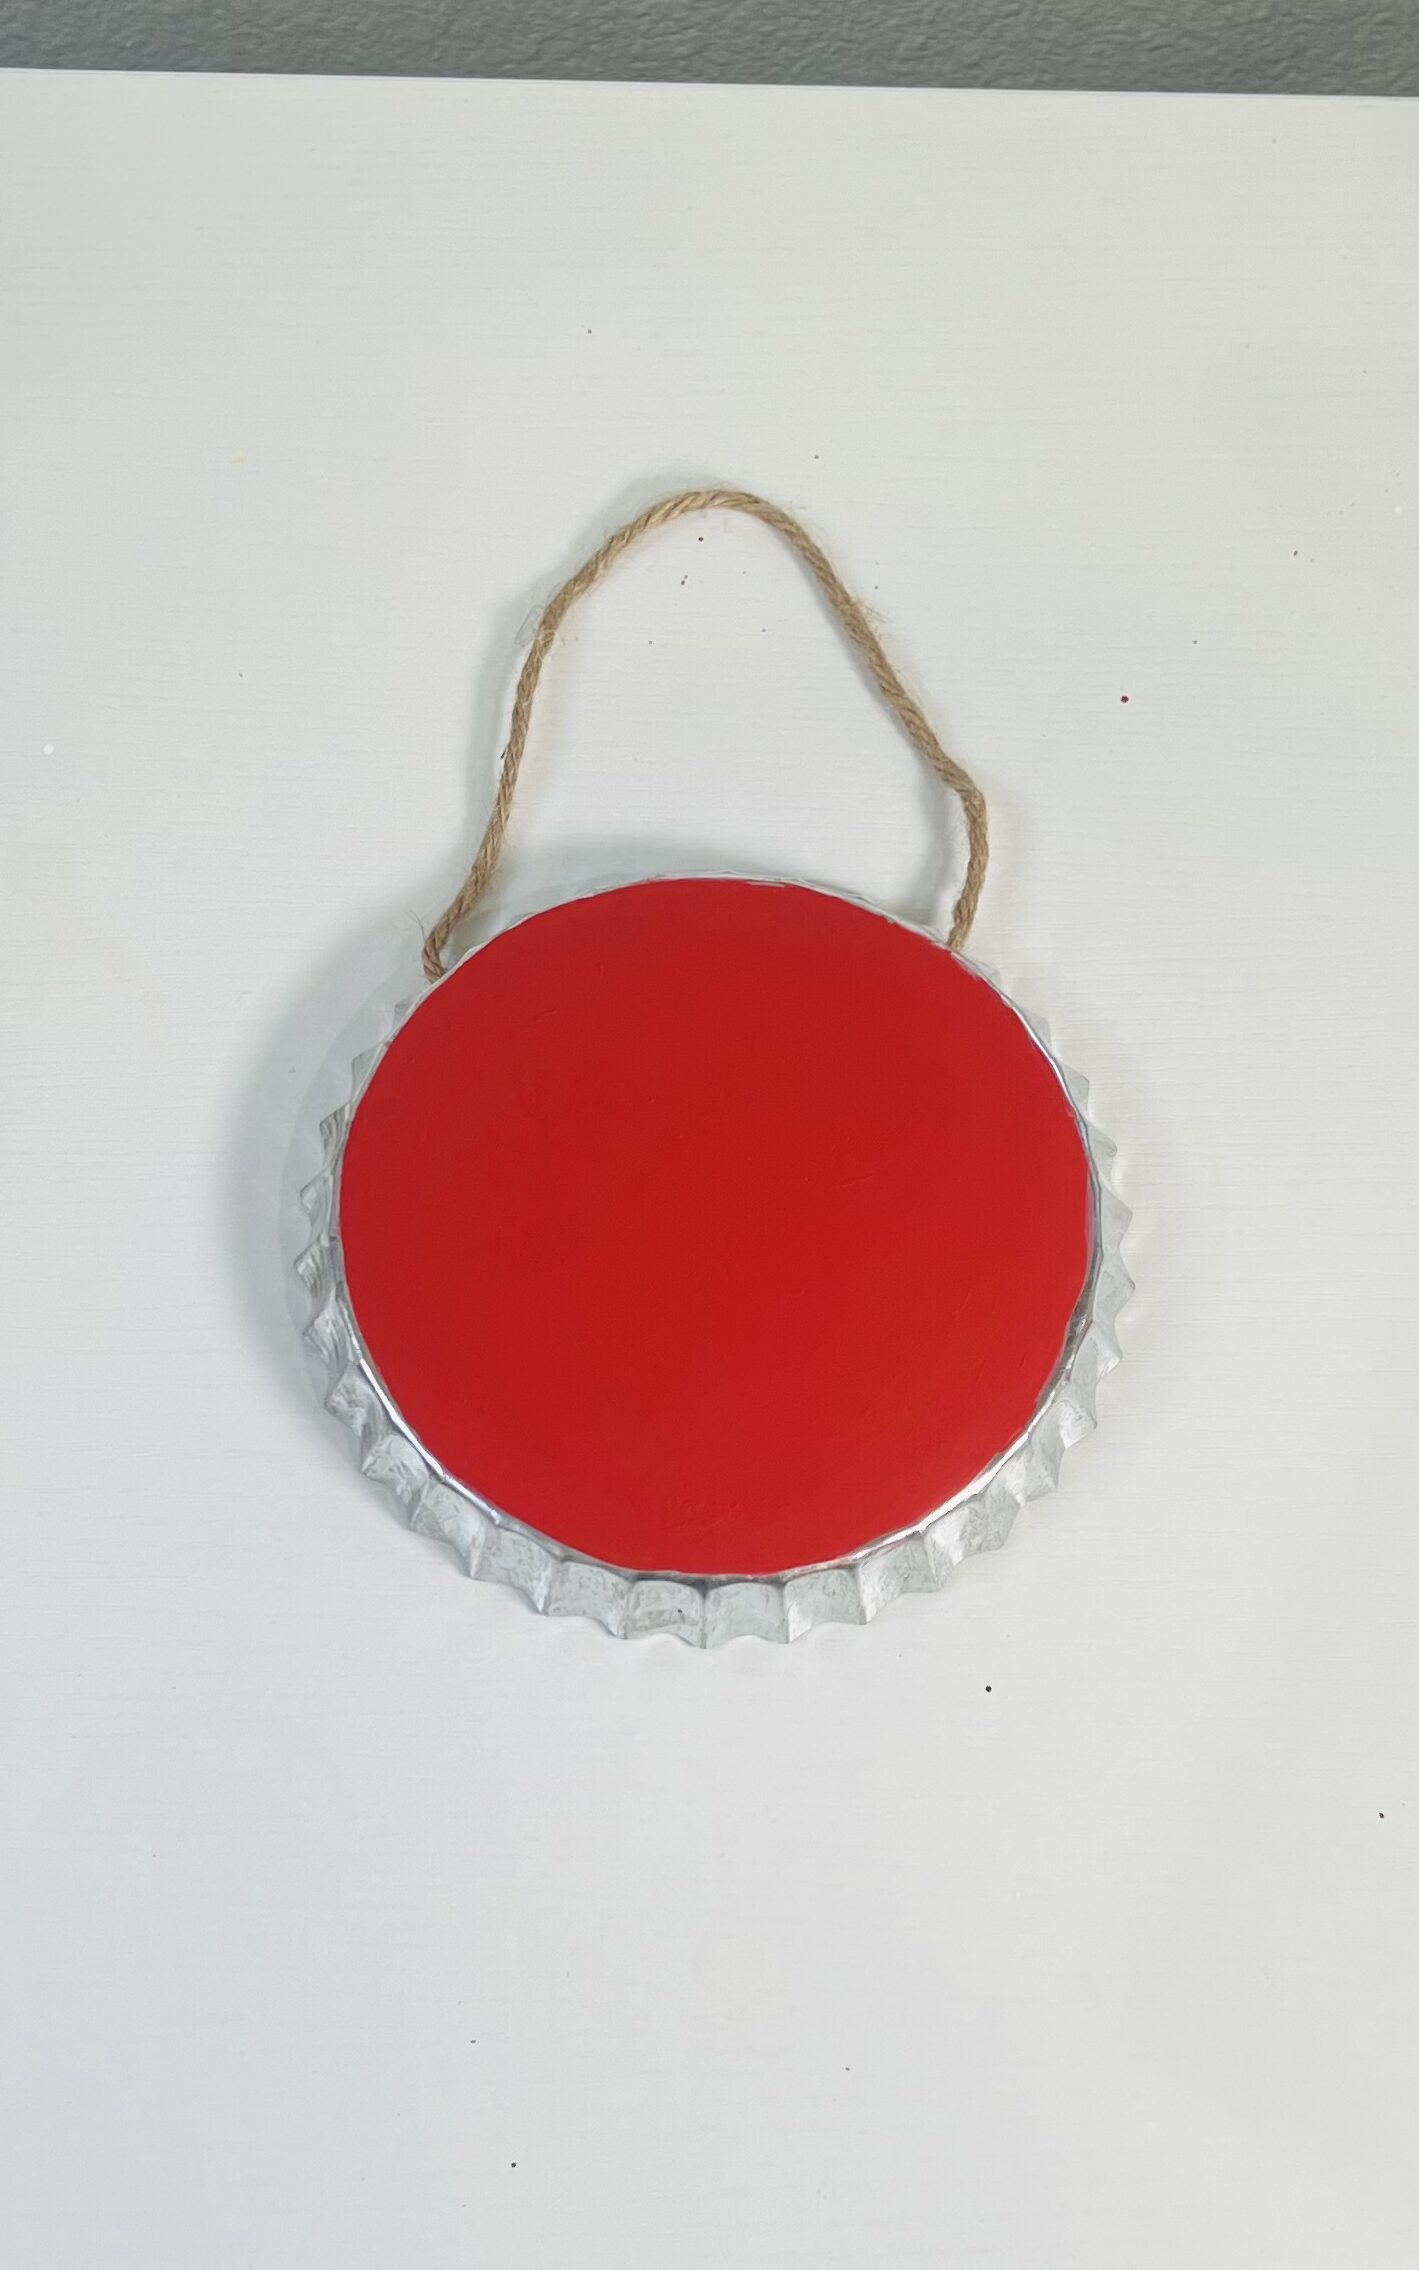 metal bottle cap painted red